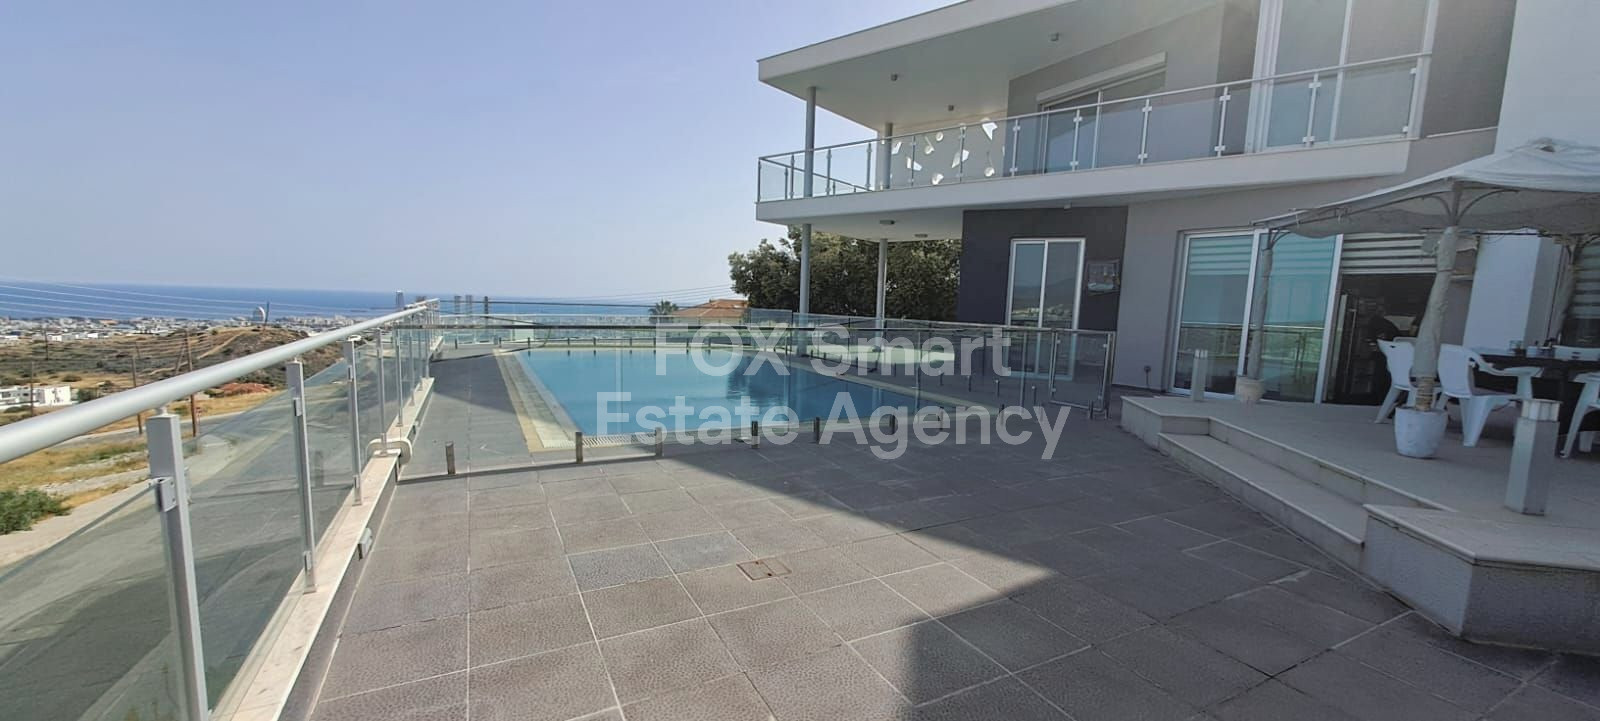 House, For Sale, Limassol, Agios Athanasios  5 Bedrooms 3 Ba.....